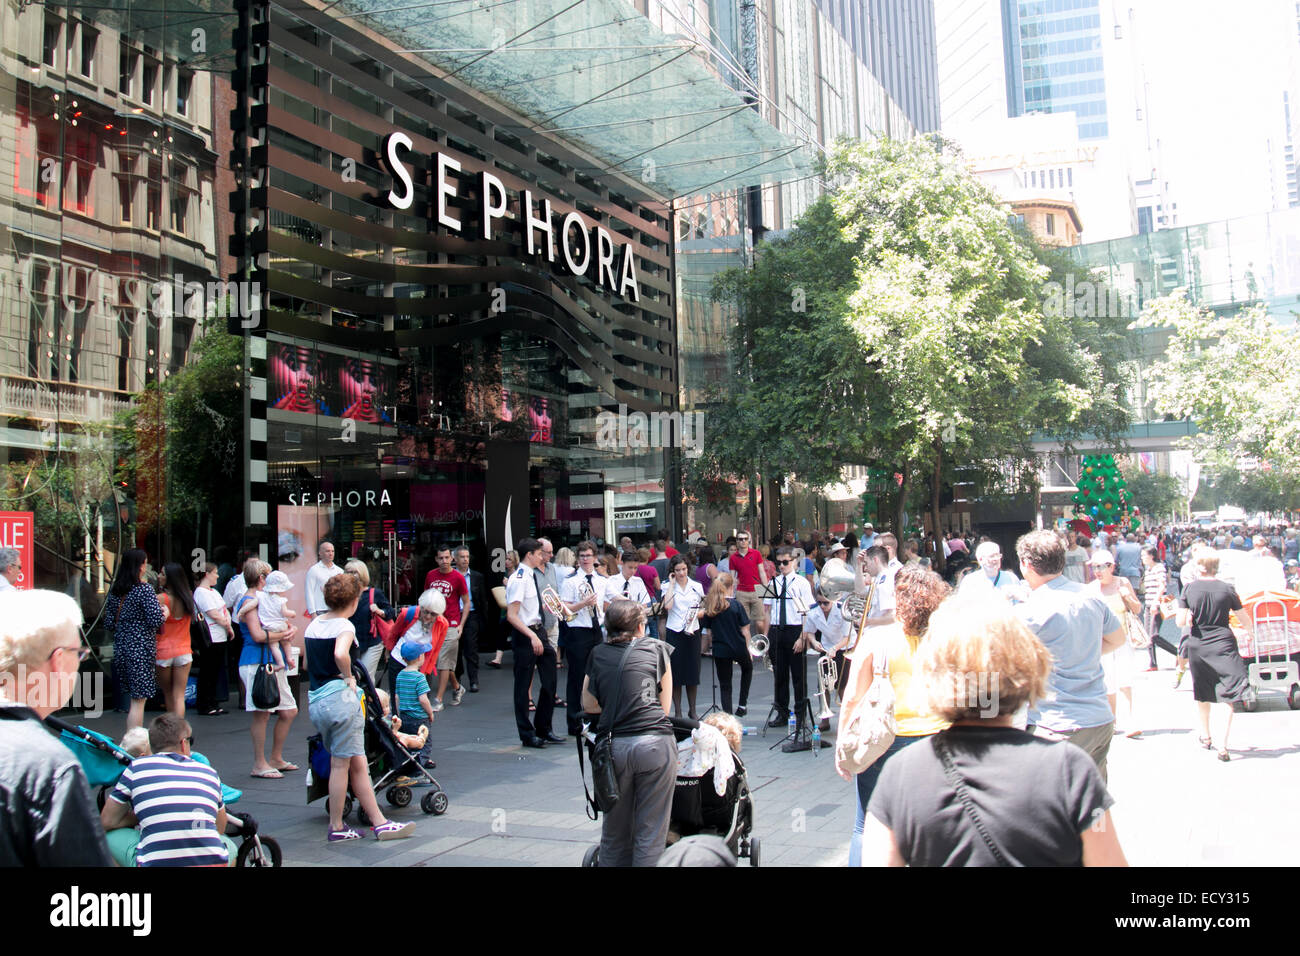 Sephora opened its first australian store in pitt street Sydney in december 2014. Stock Photo